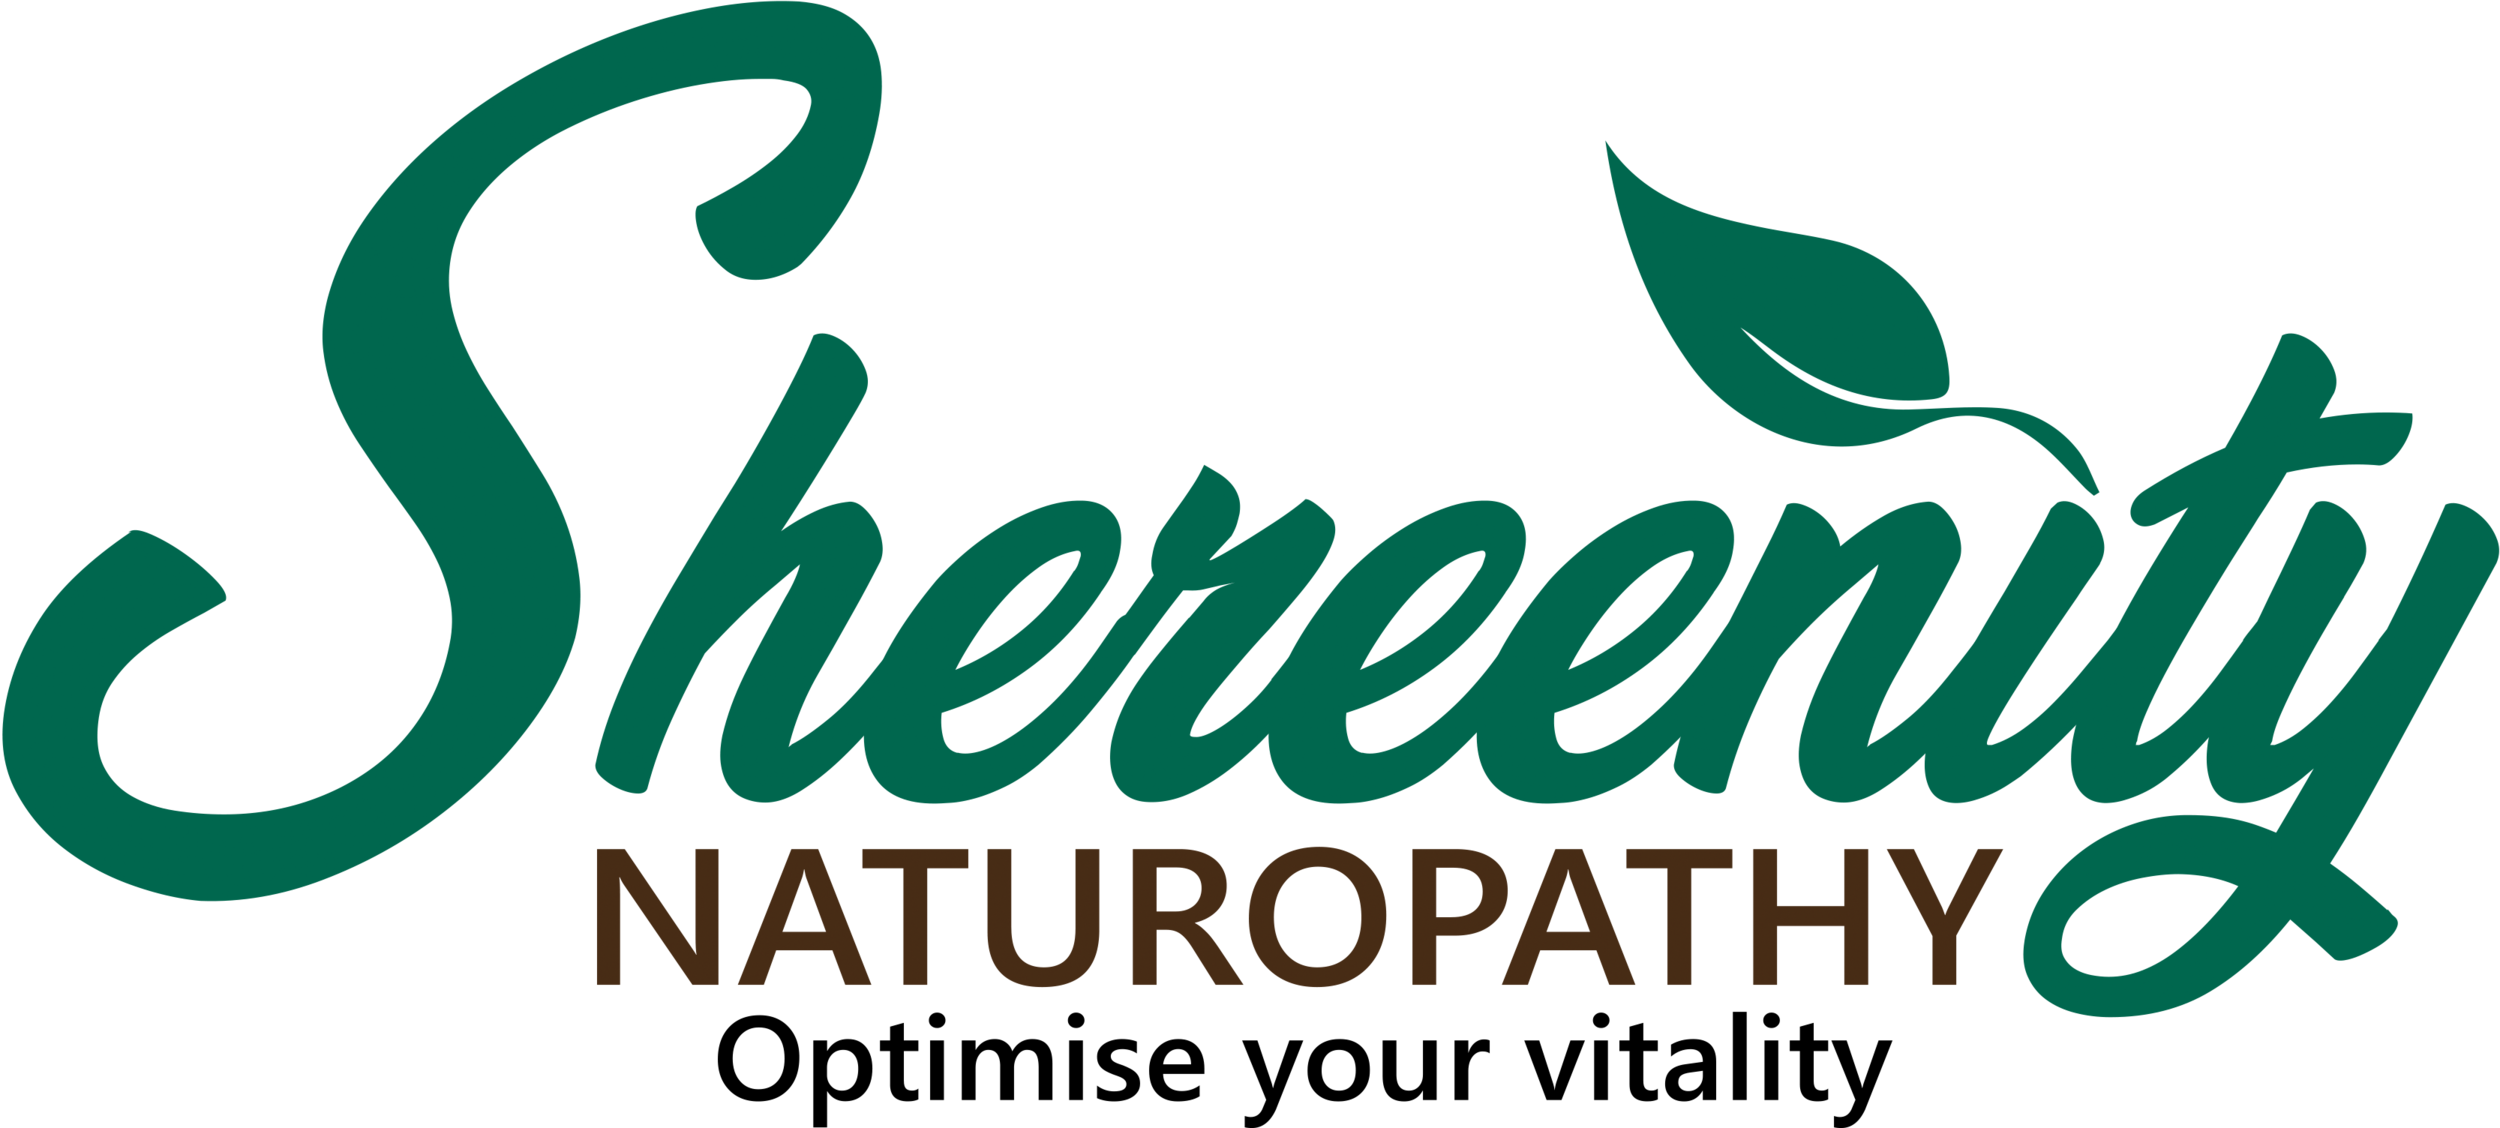 Sheree Neale - Shereenity Naturopathy